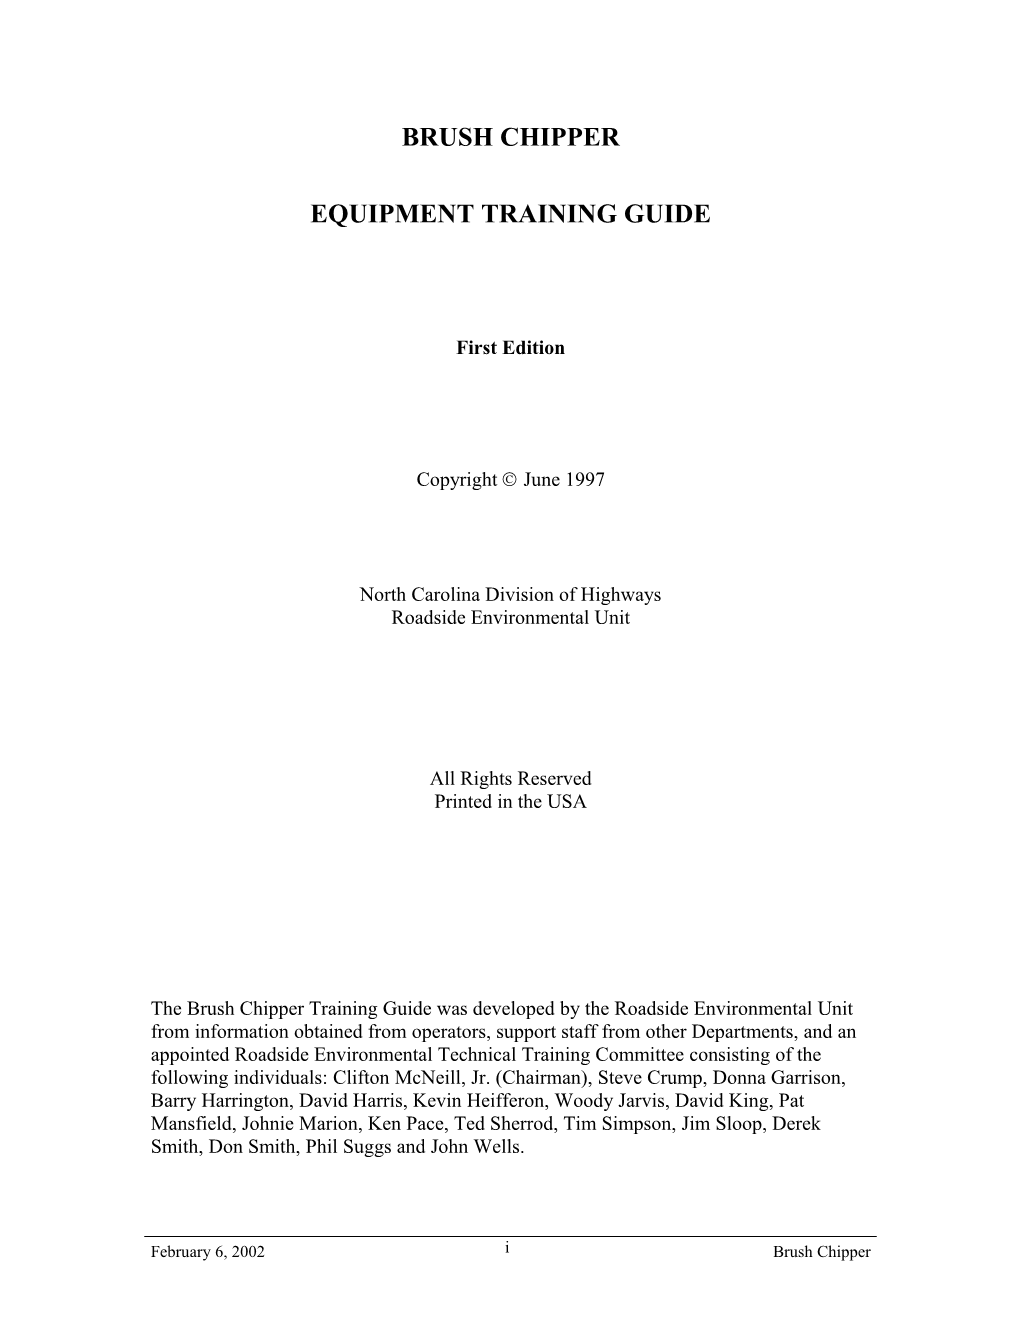 Equipment Training Guide